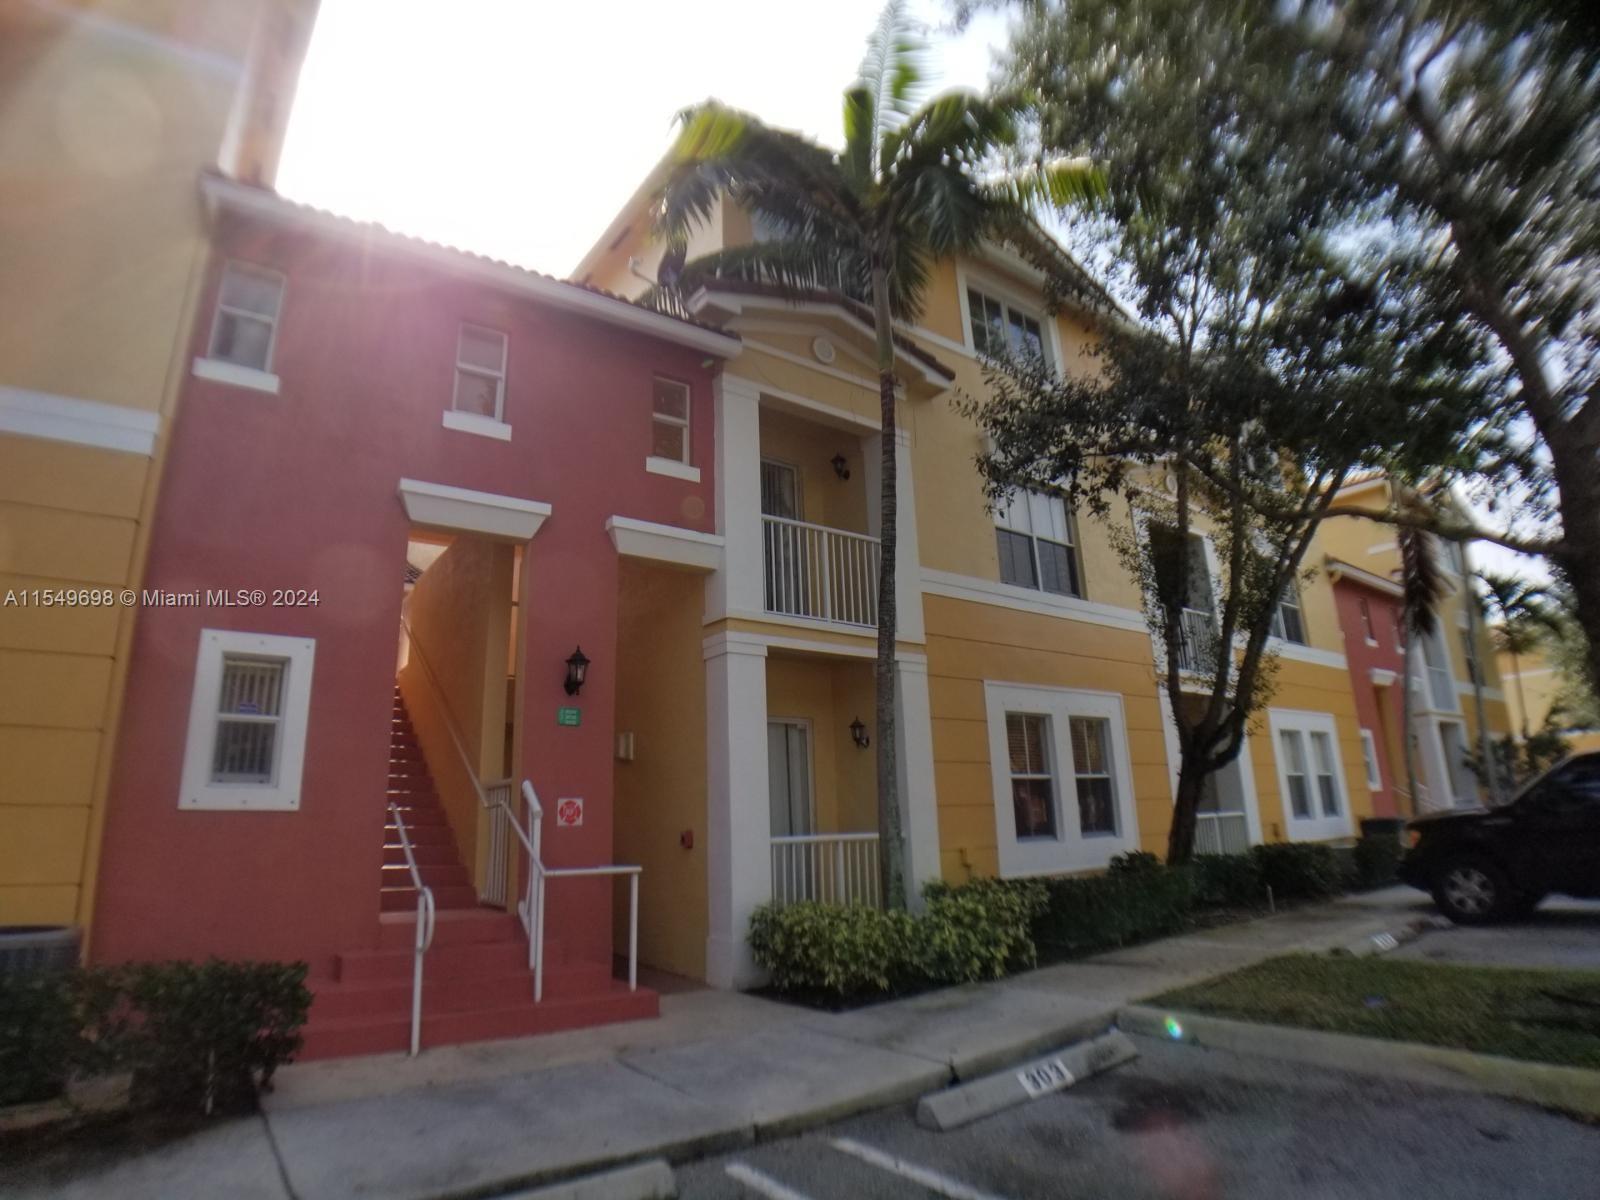 Rental Property at 2035 Shoma Dr 2035, Royal Palm Beach, Palm Beach County, Florida - Bedrooms: 2 
Bathrooms: 3  - $2,100 MO.